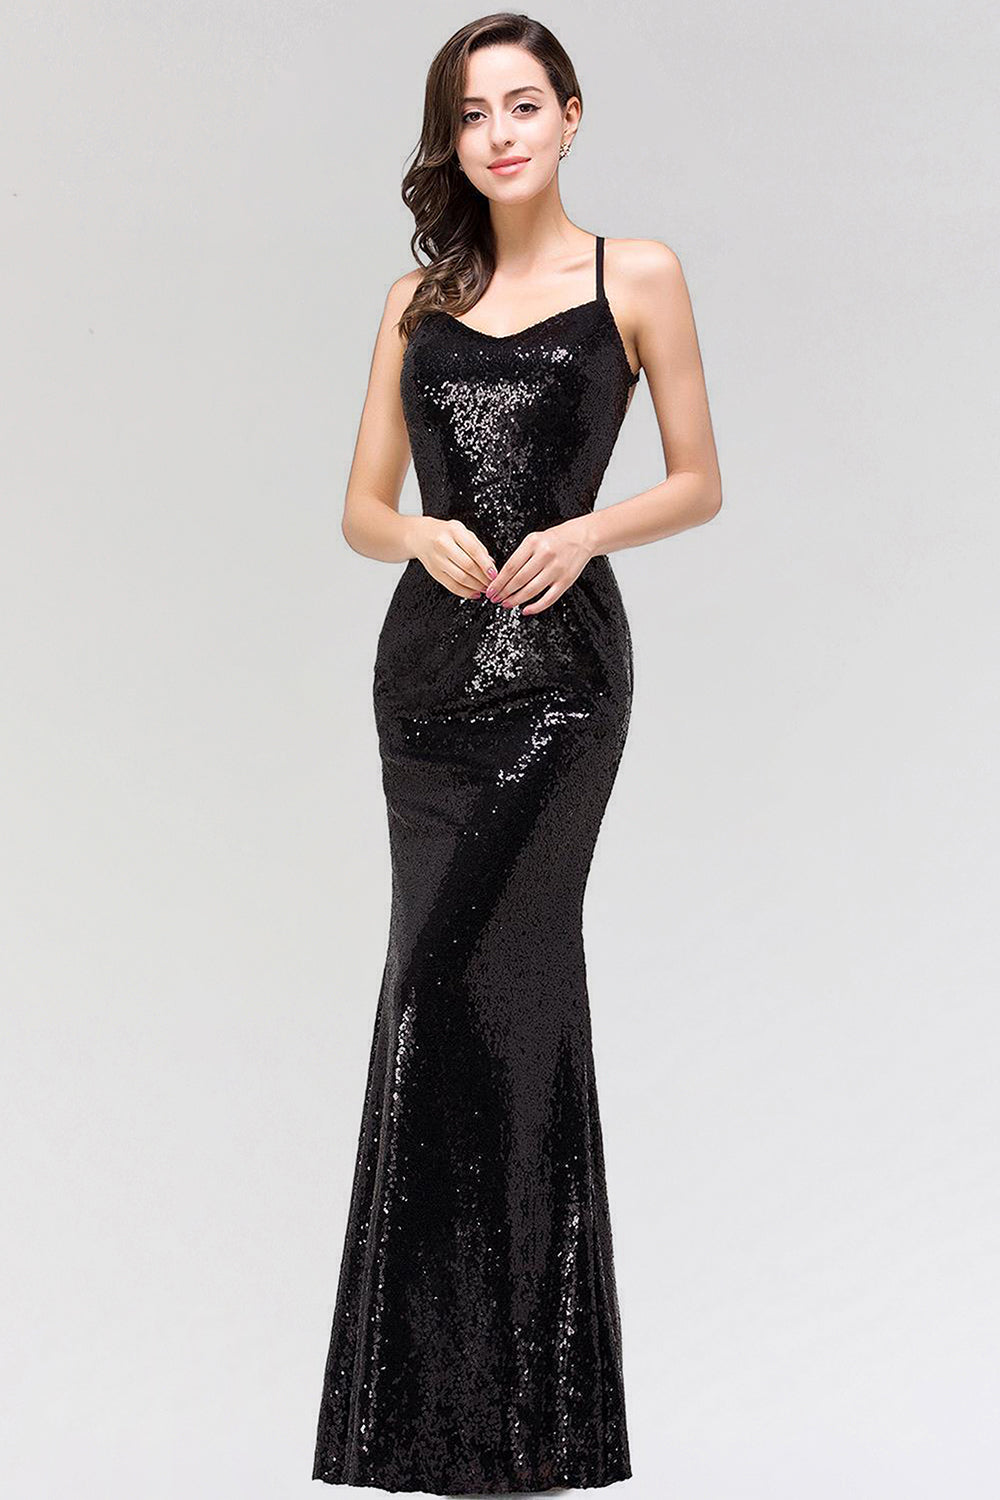 Elegant Mermaid Sequined Long Black Bridesmaid Dress with Spaghetti Straps